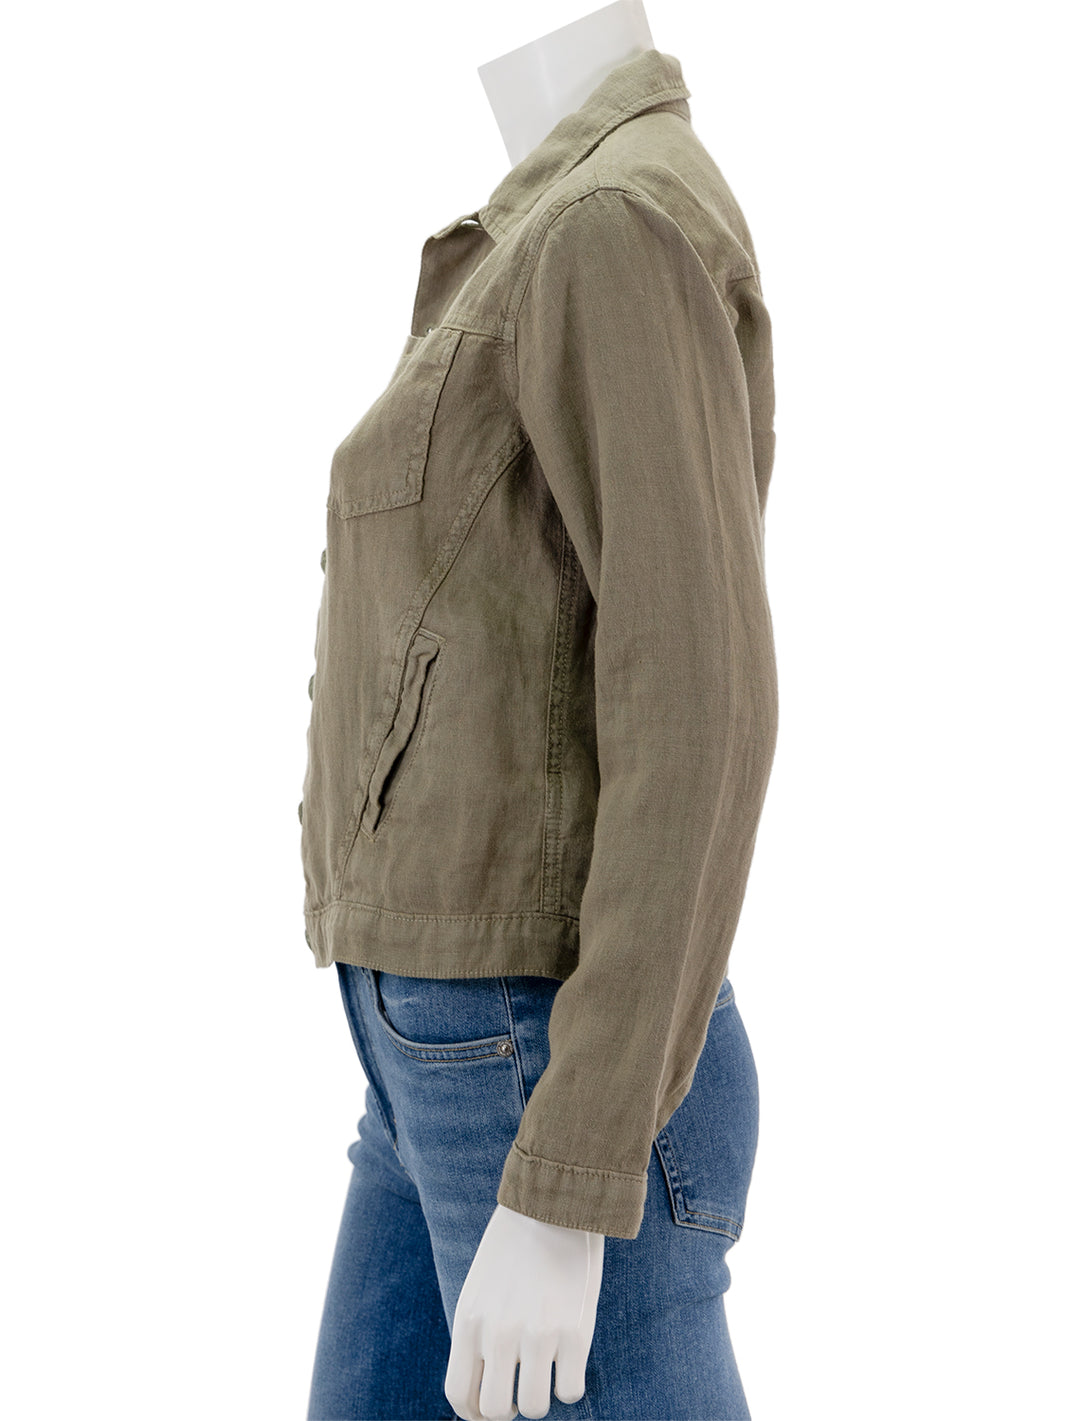 Side view of L'agence's celine slim femme jacket in covert green.